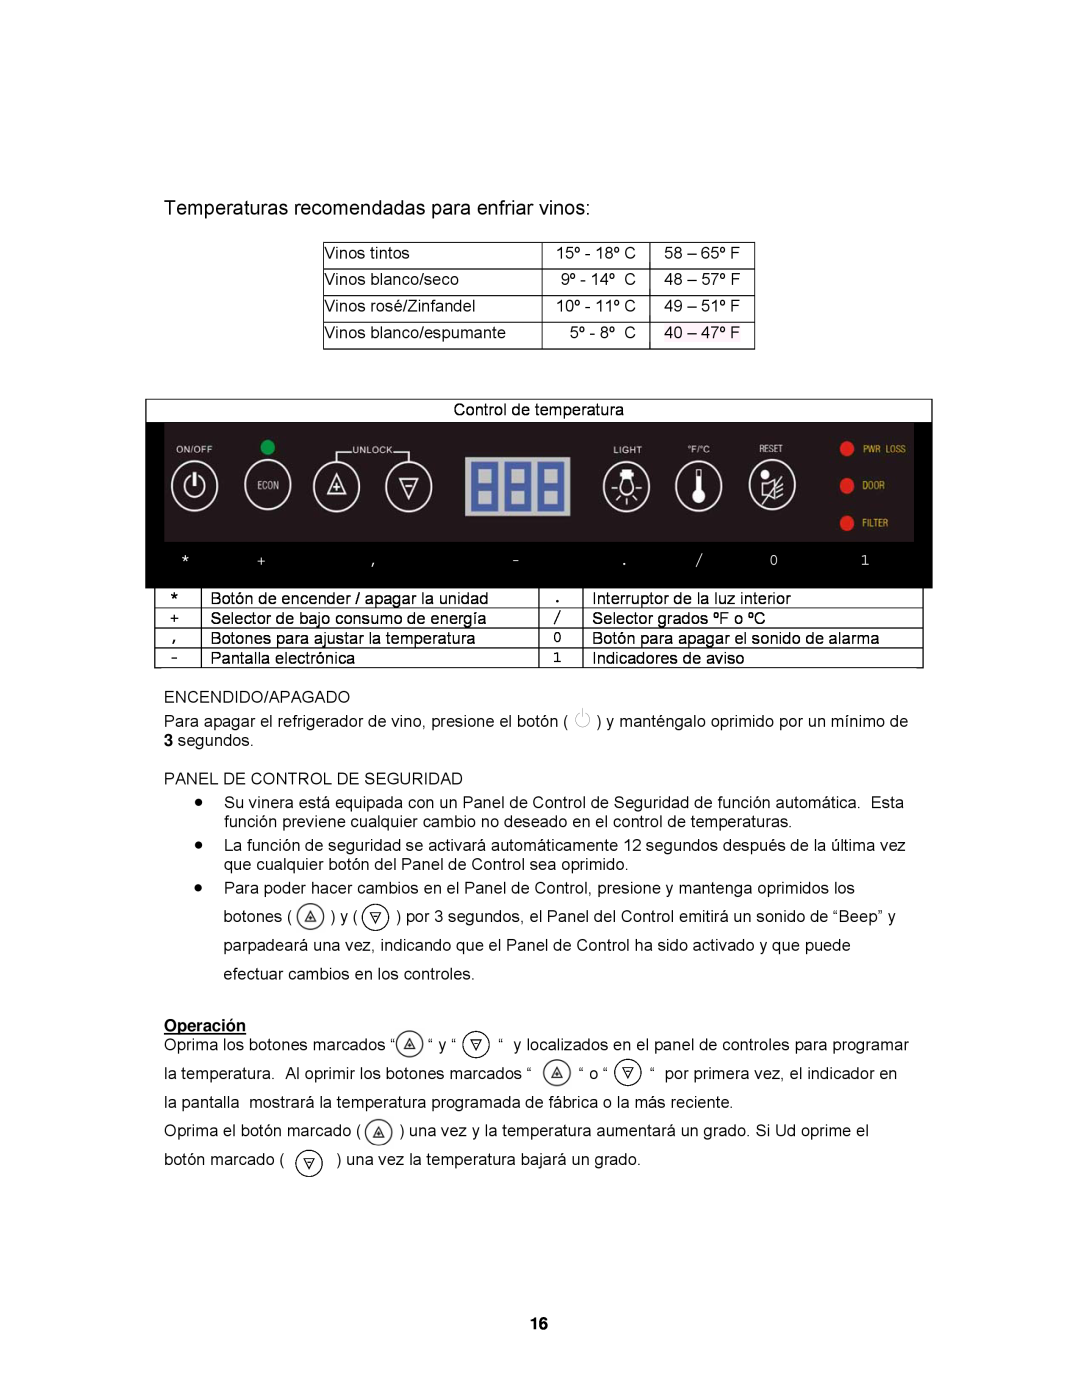 Avanti WCR9000S instruction manual Temperaturas recomendadas para enfriar vinos, Operación 